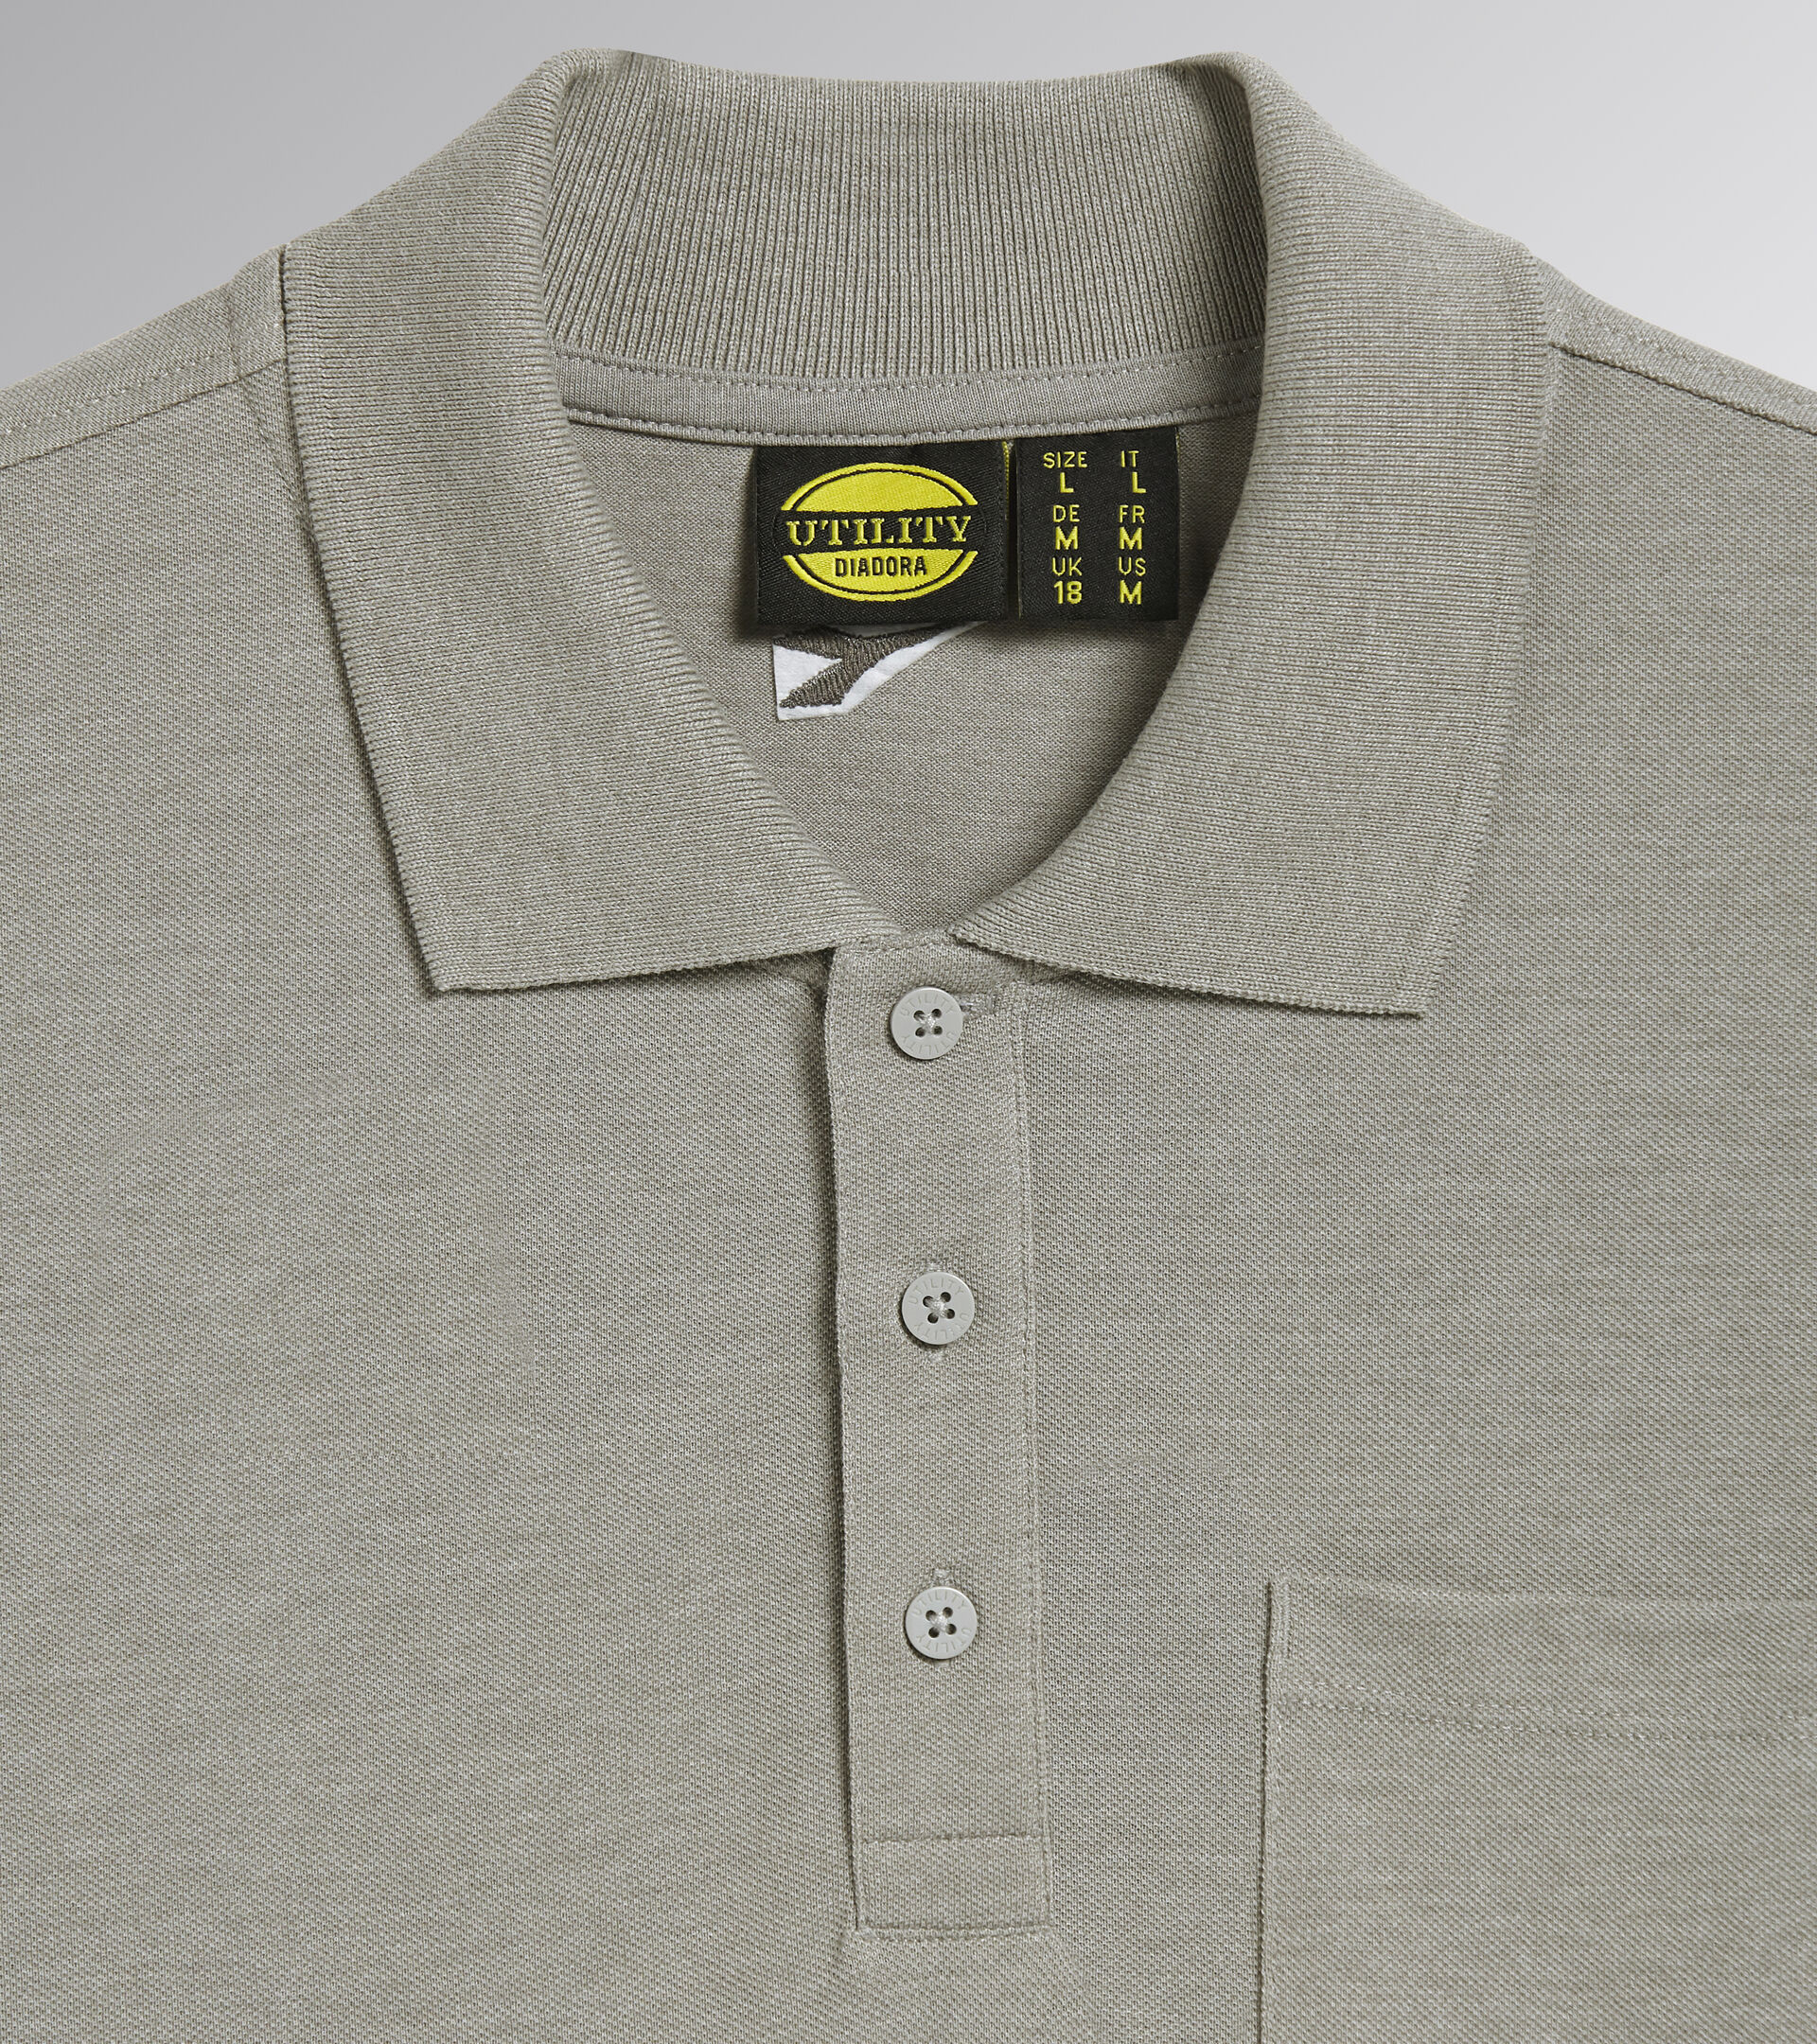 Short-sleeved work polo shirt POLO MC INDUSTRY LIGHT MIDDLE GREY MELANGE - Utility